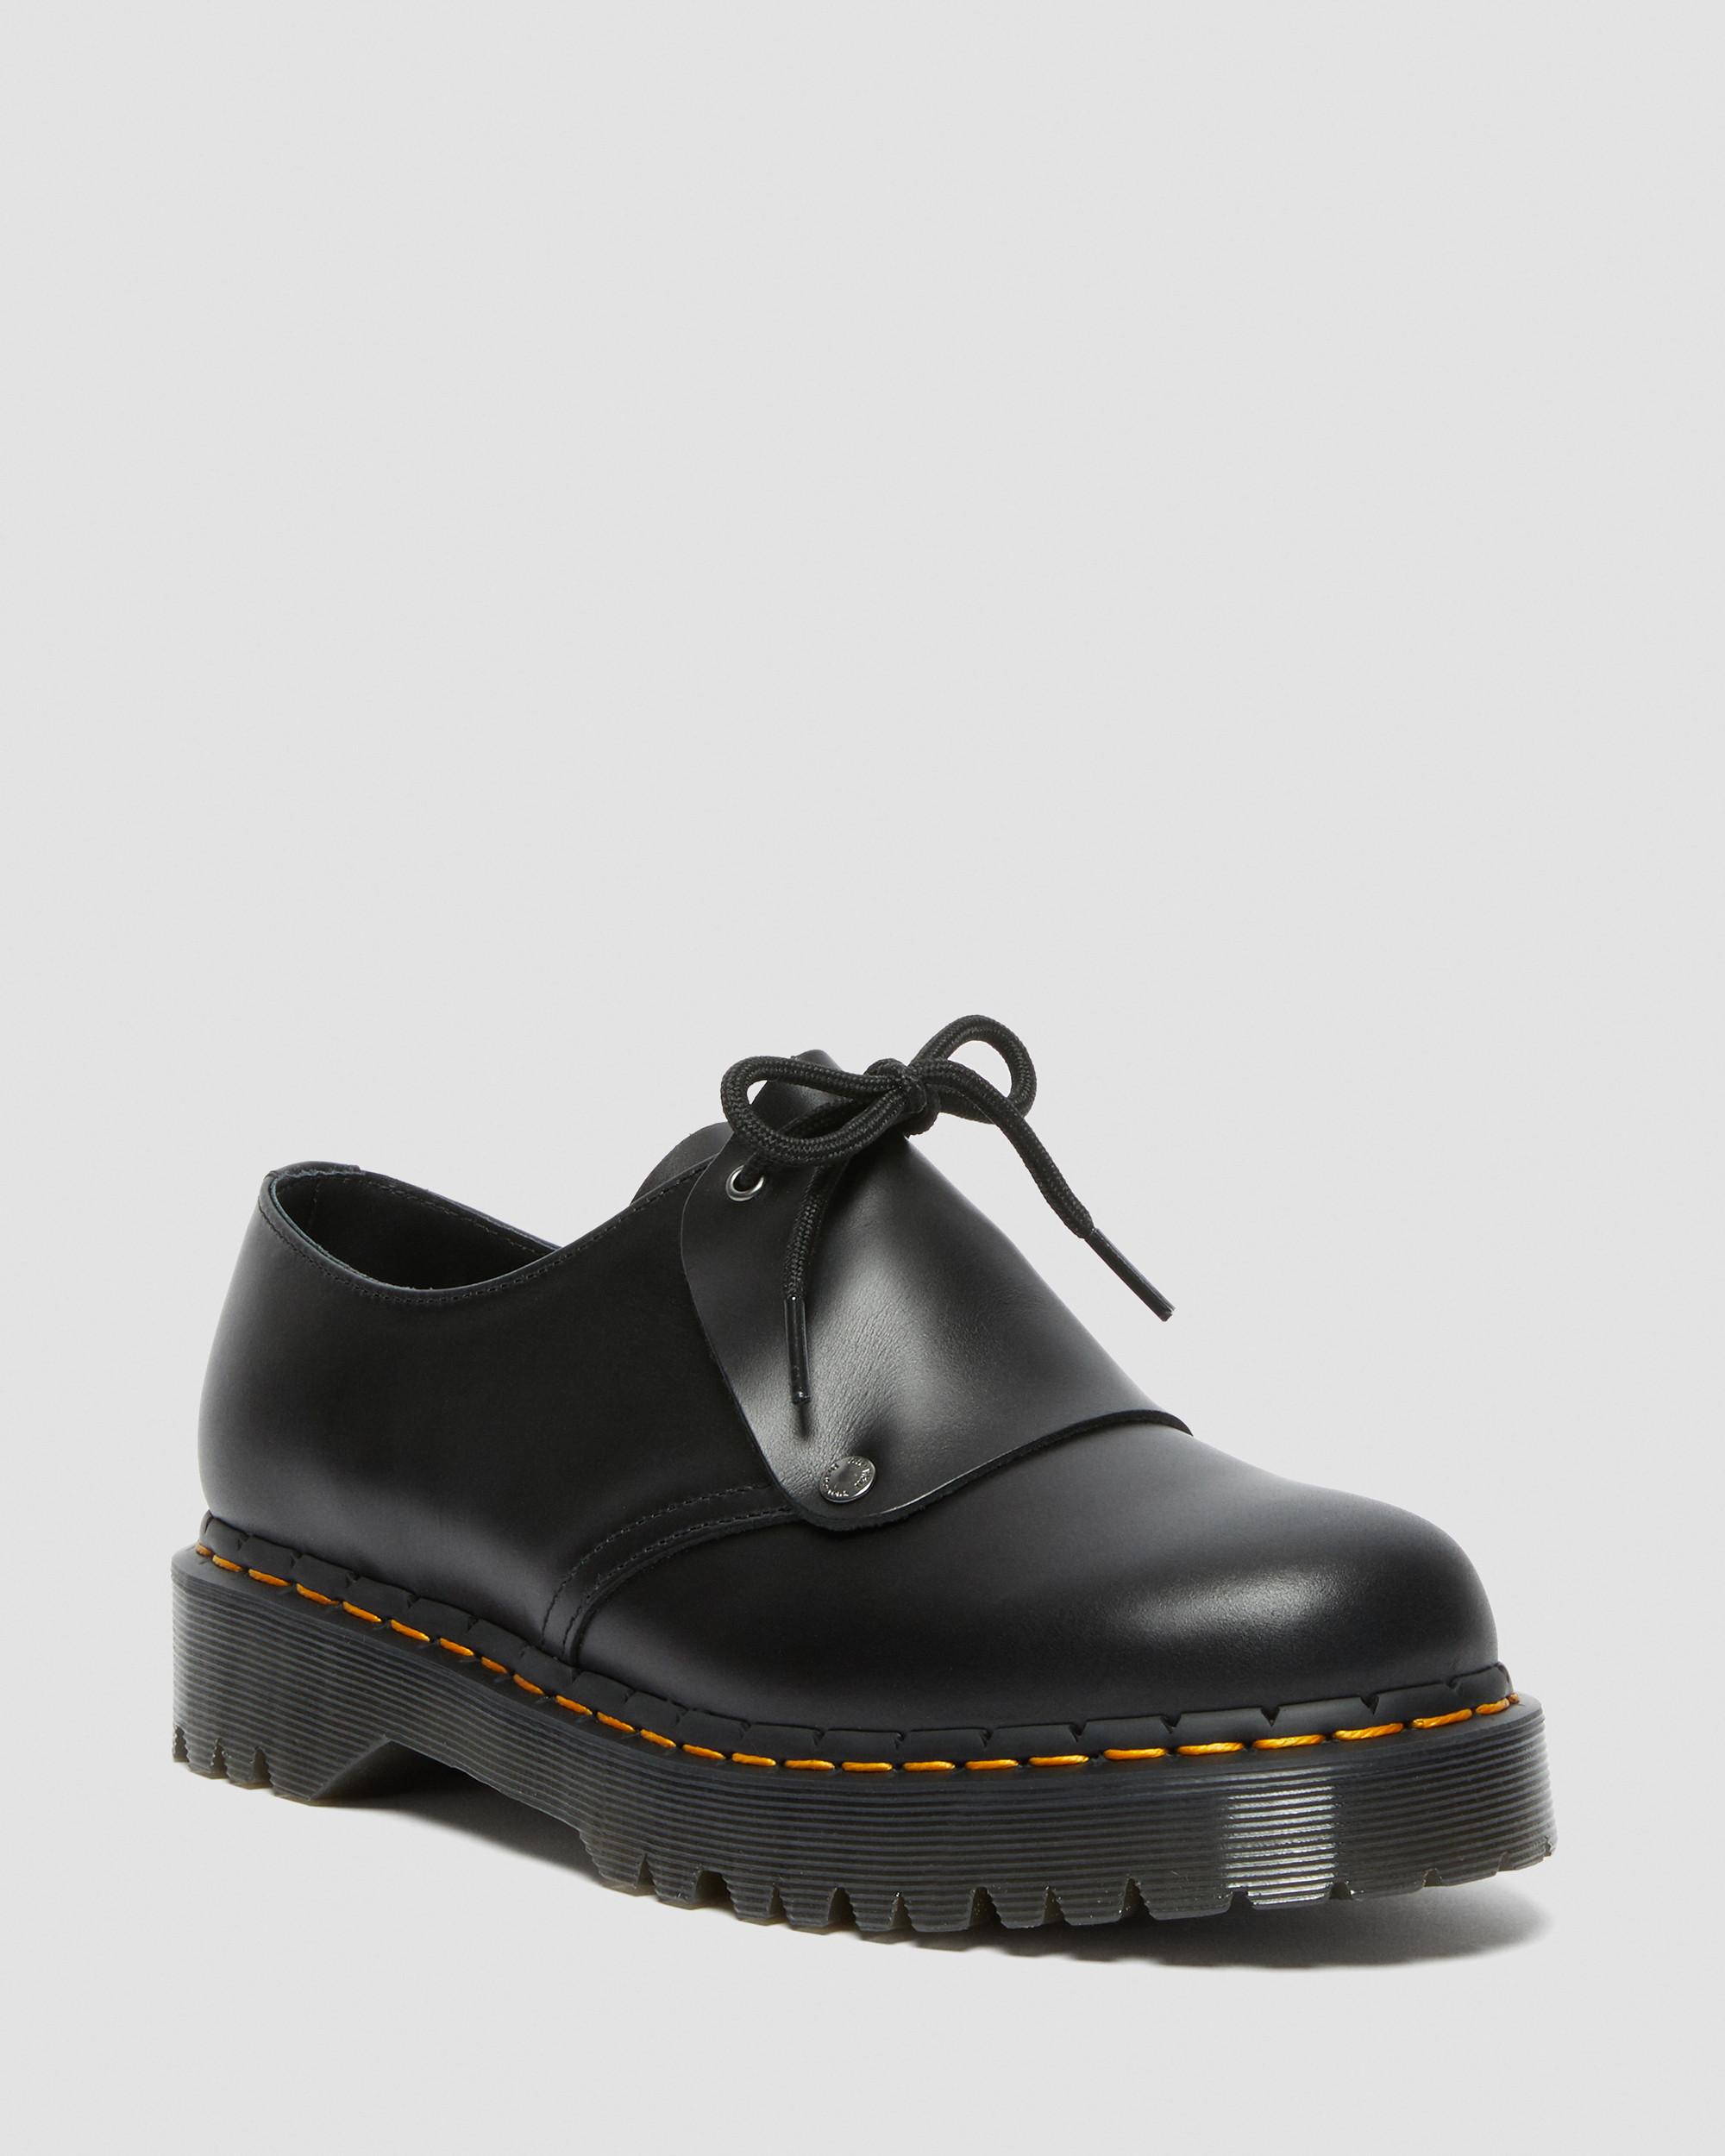 1461 Bex Brando Leather Oxford Shoes | Dr. Martens